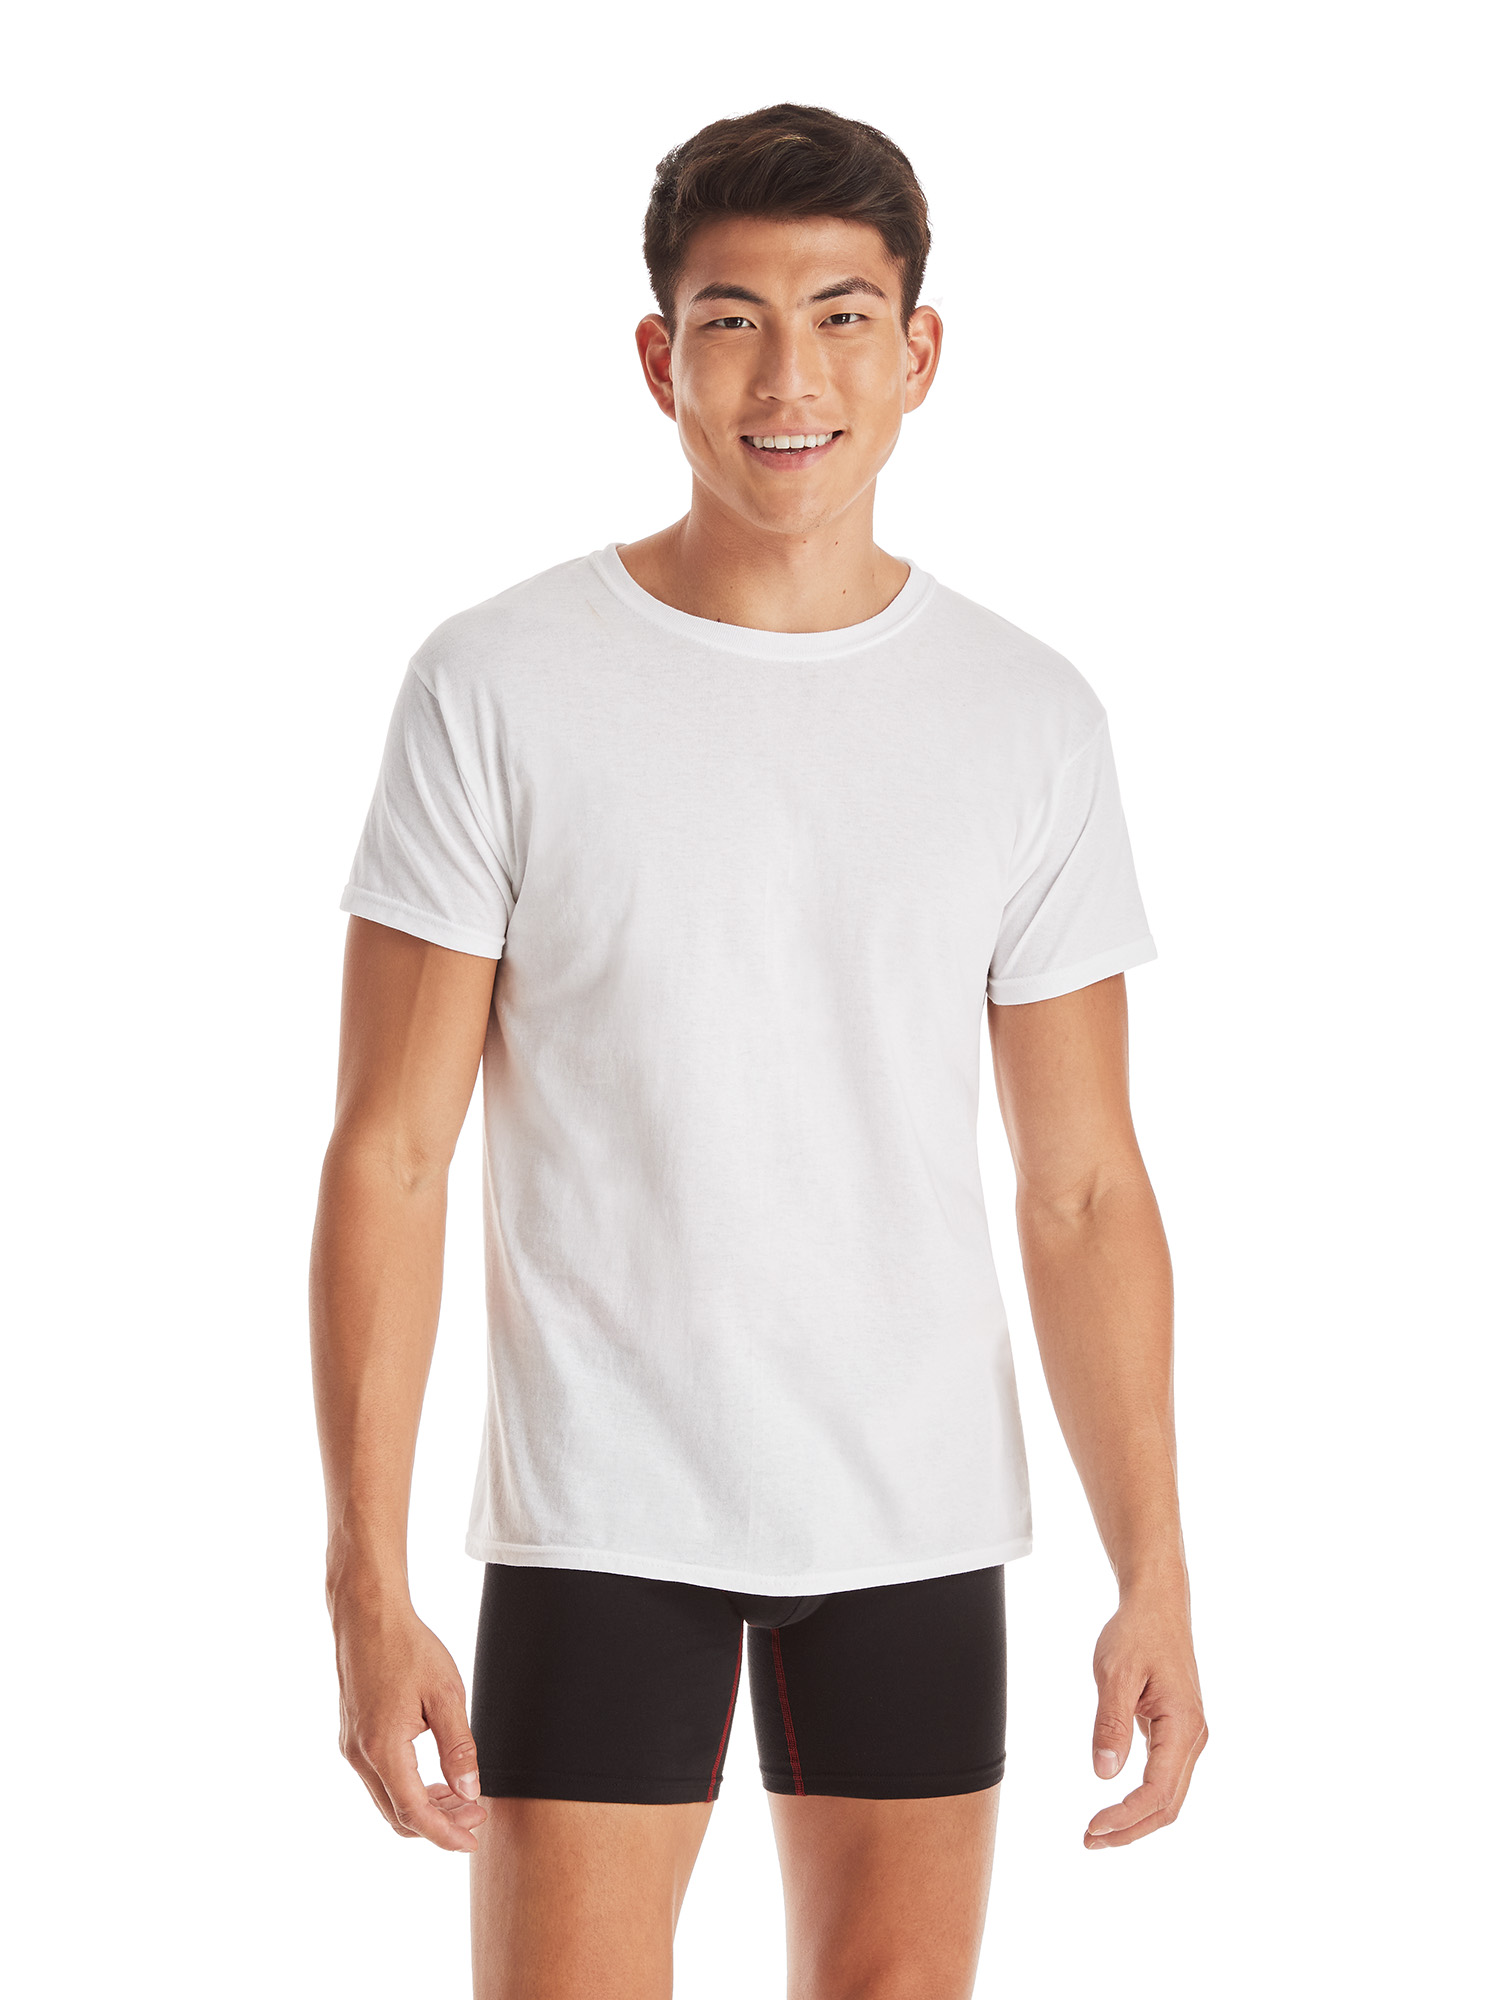 Hanes Men's White Crew T-Shirt Undershirts, 3 Pack - image 3 of 9